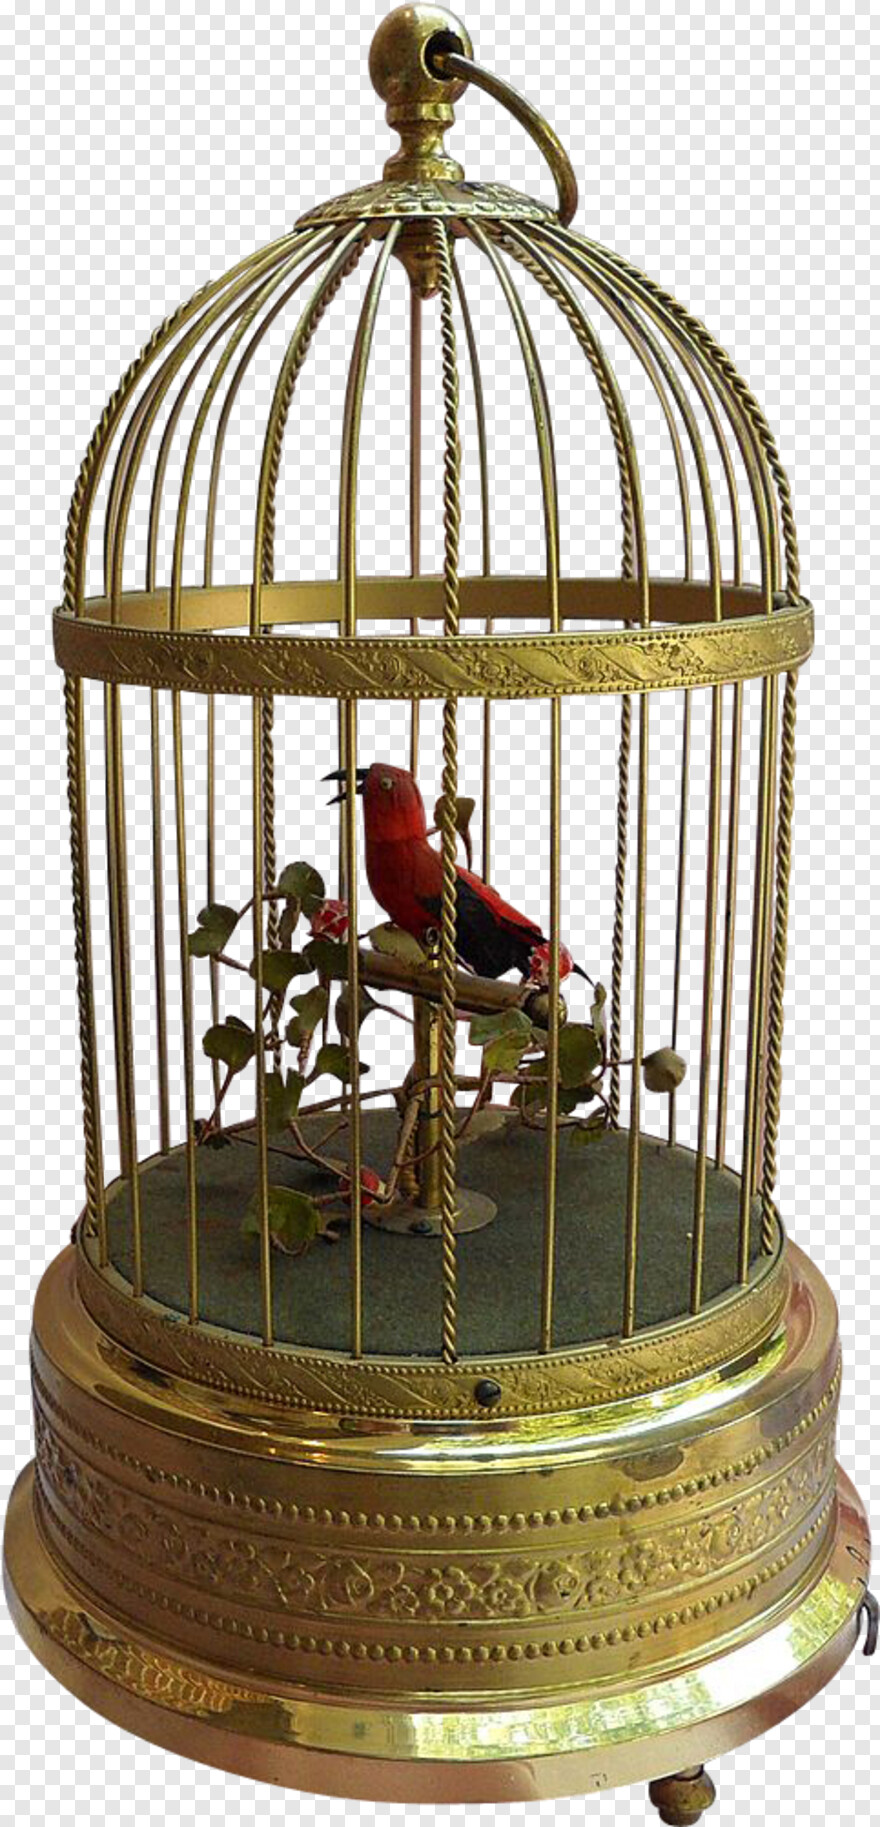 bird-cage # 359988